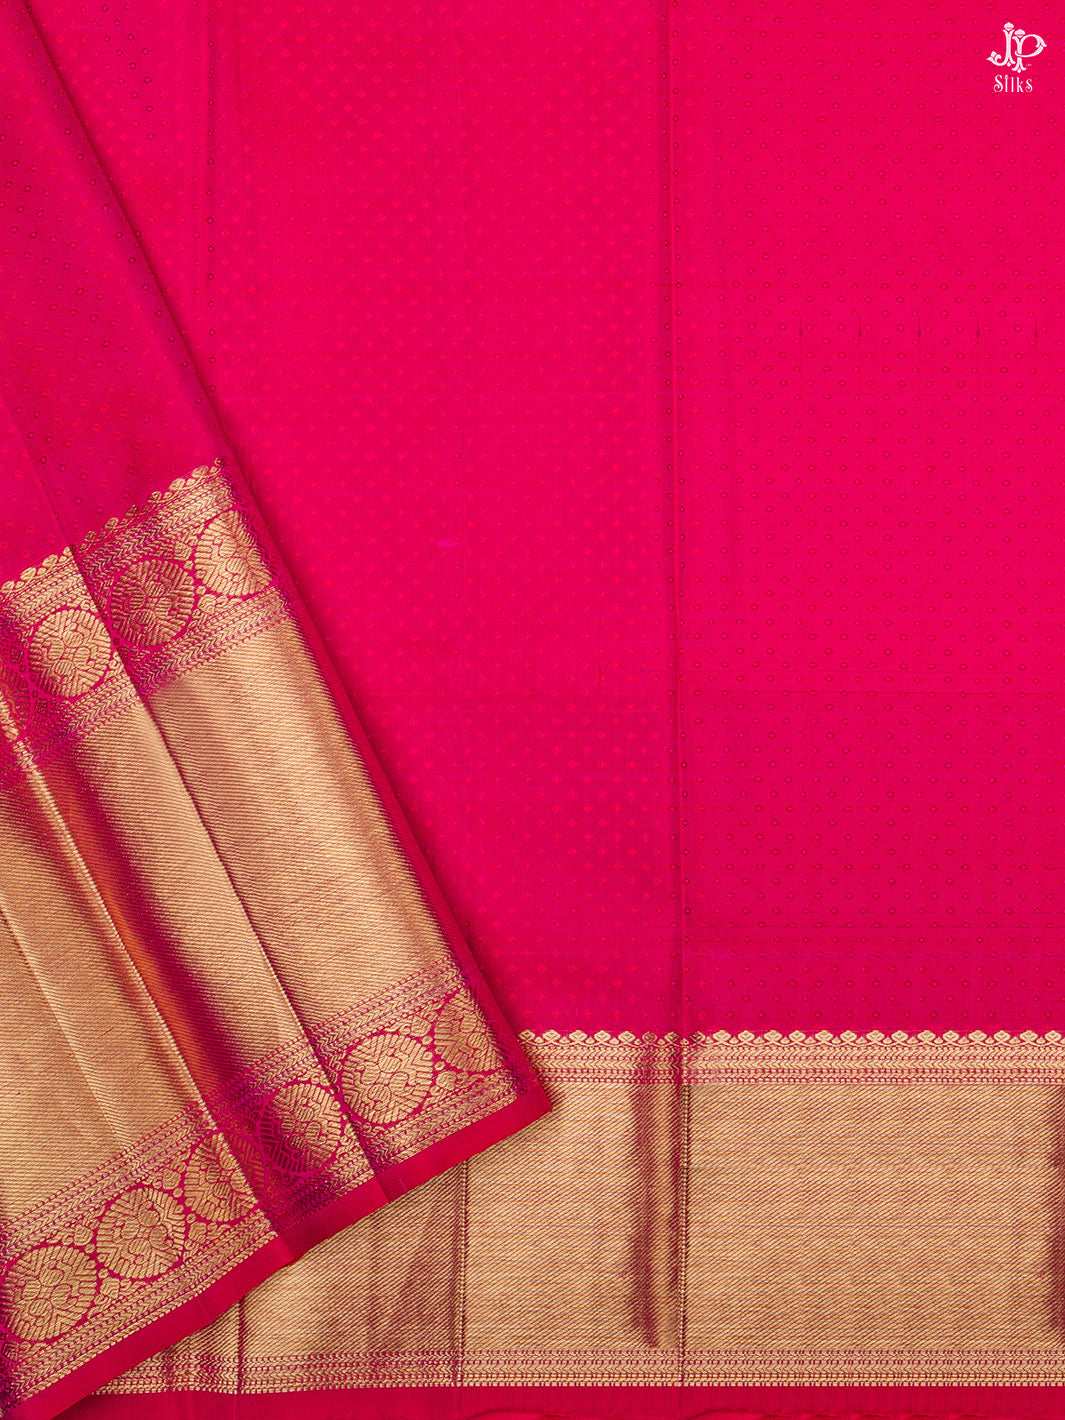 Rani Pink Kanchipuram Silk Saree - A341 - View 4